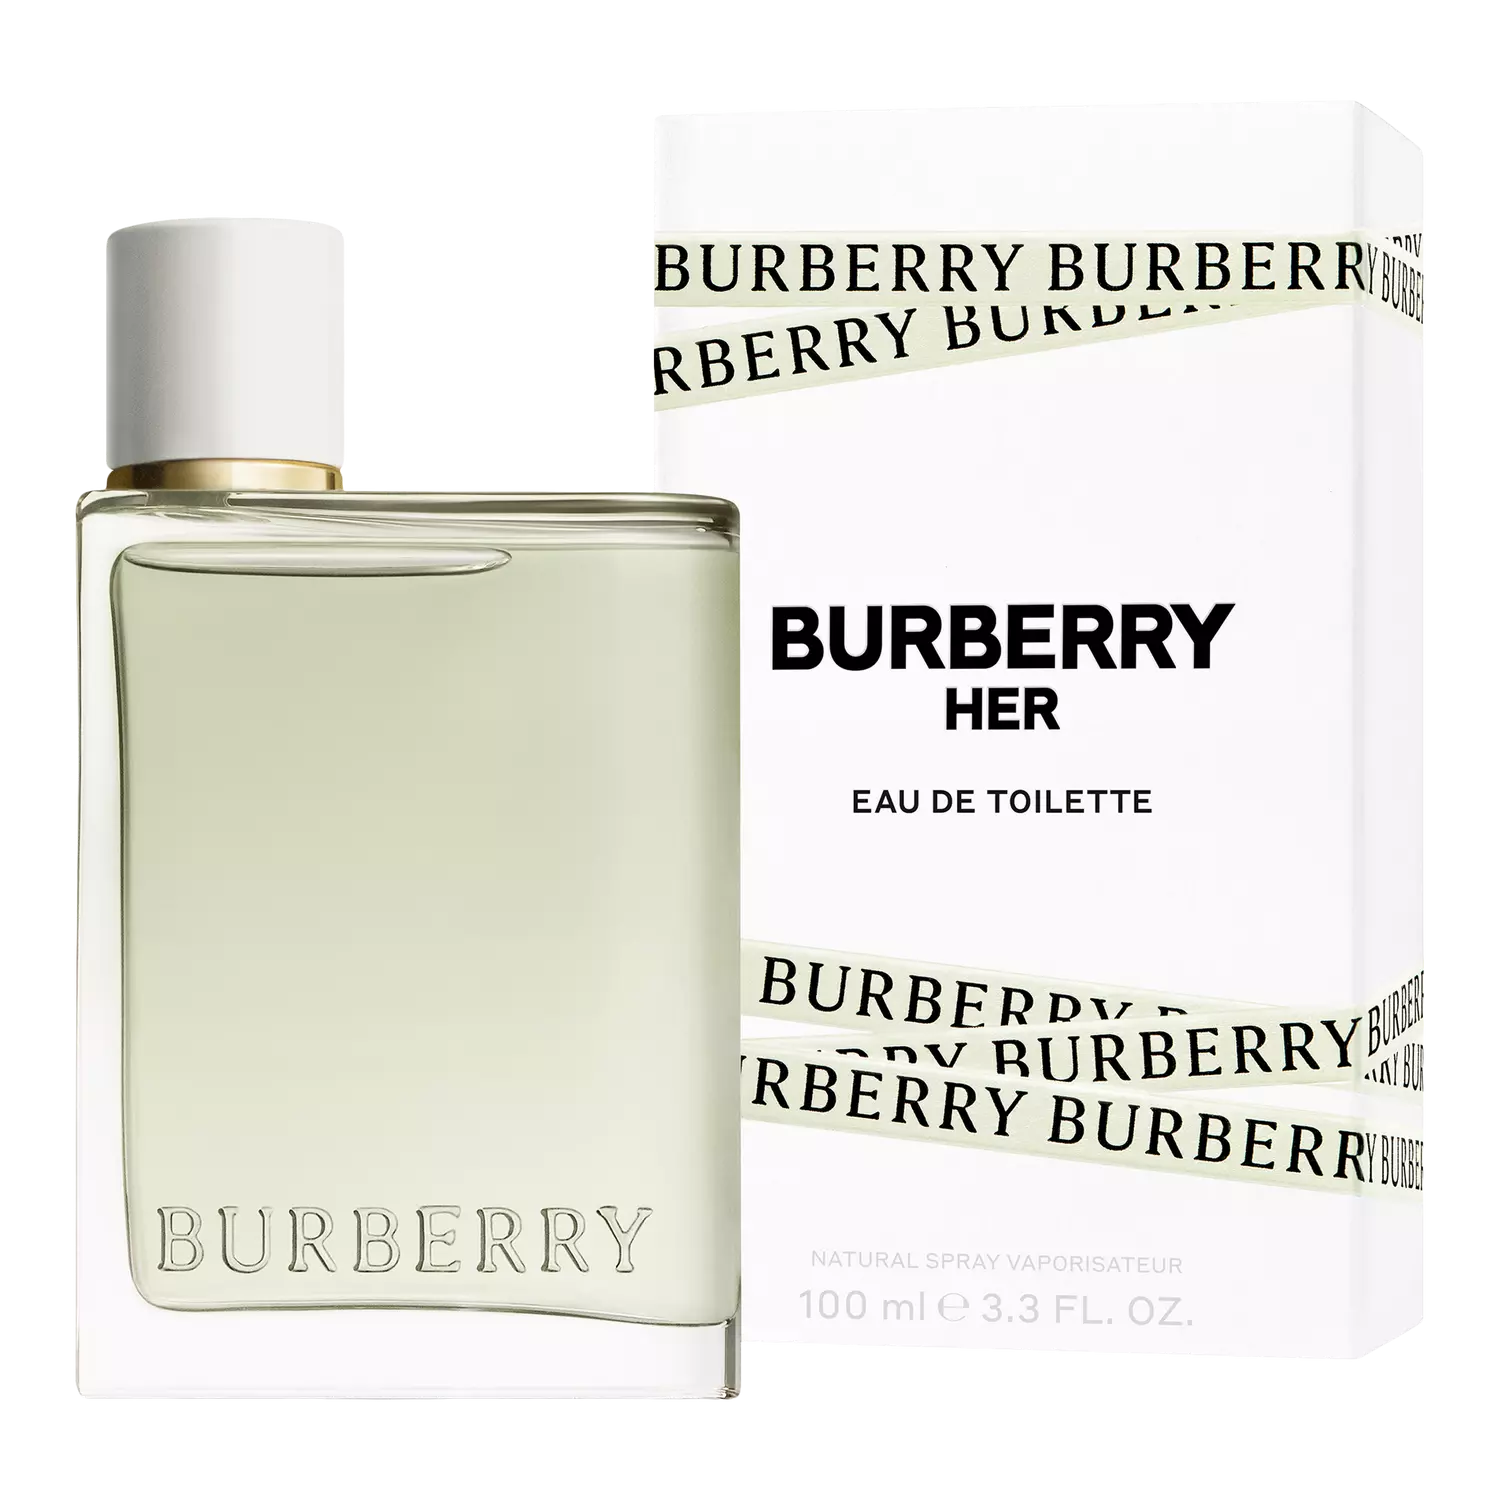 Burberry Her Eau de Toilette by Burberry 3.3 oz EDT Spray for Women